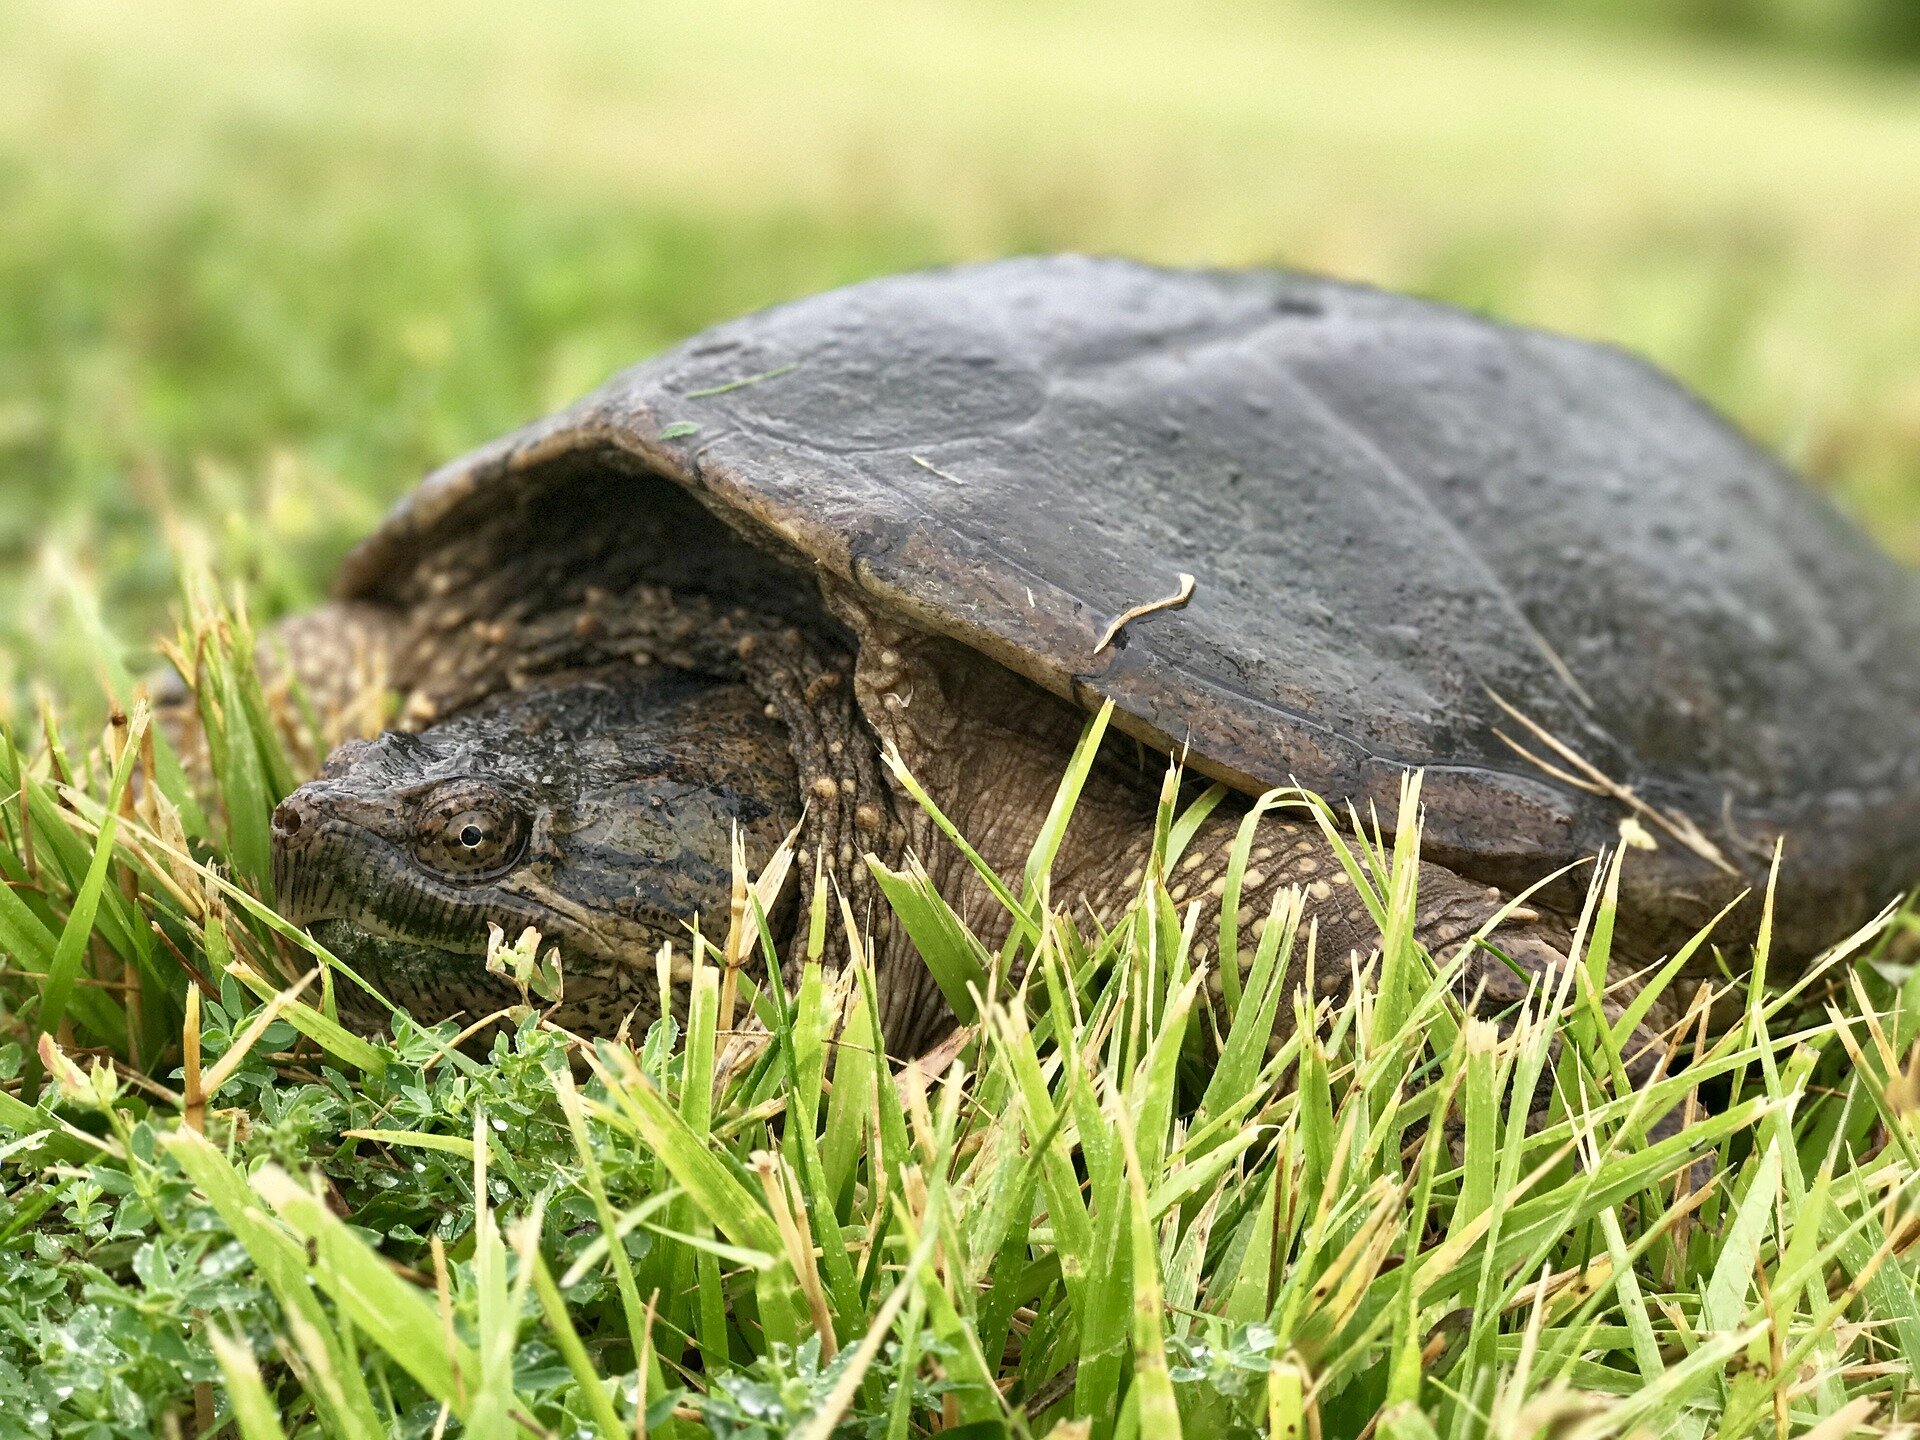 T turtle. Каймановская черепаха. Грифовая черепаха. Черепаха на траве. Черепашка в траве.